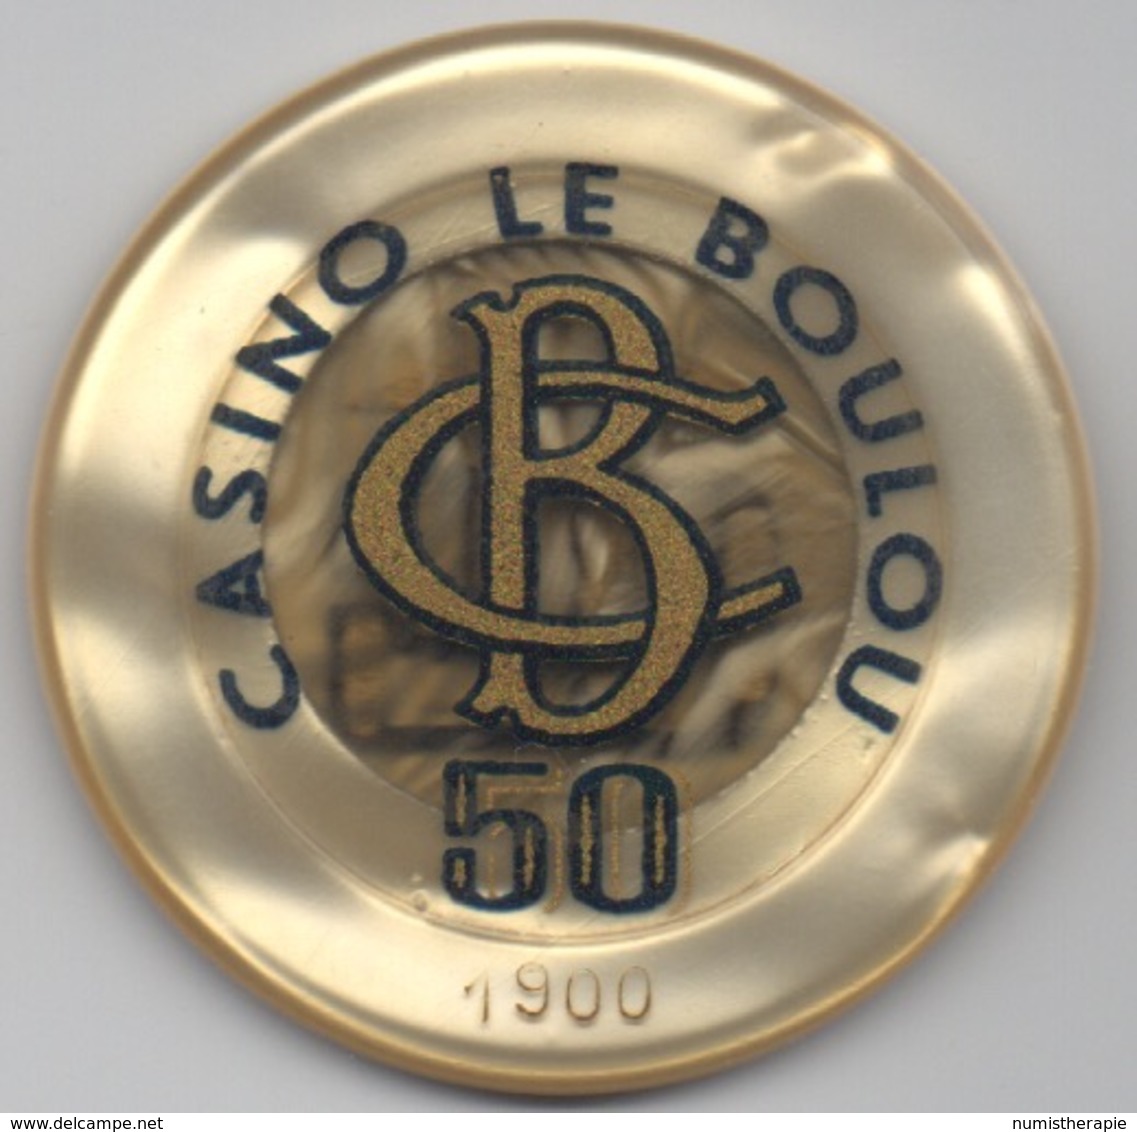 Jeton De Casino Le Boulou 50 Francs - Casino